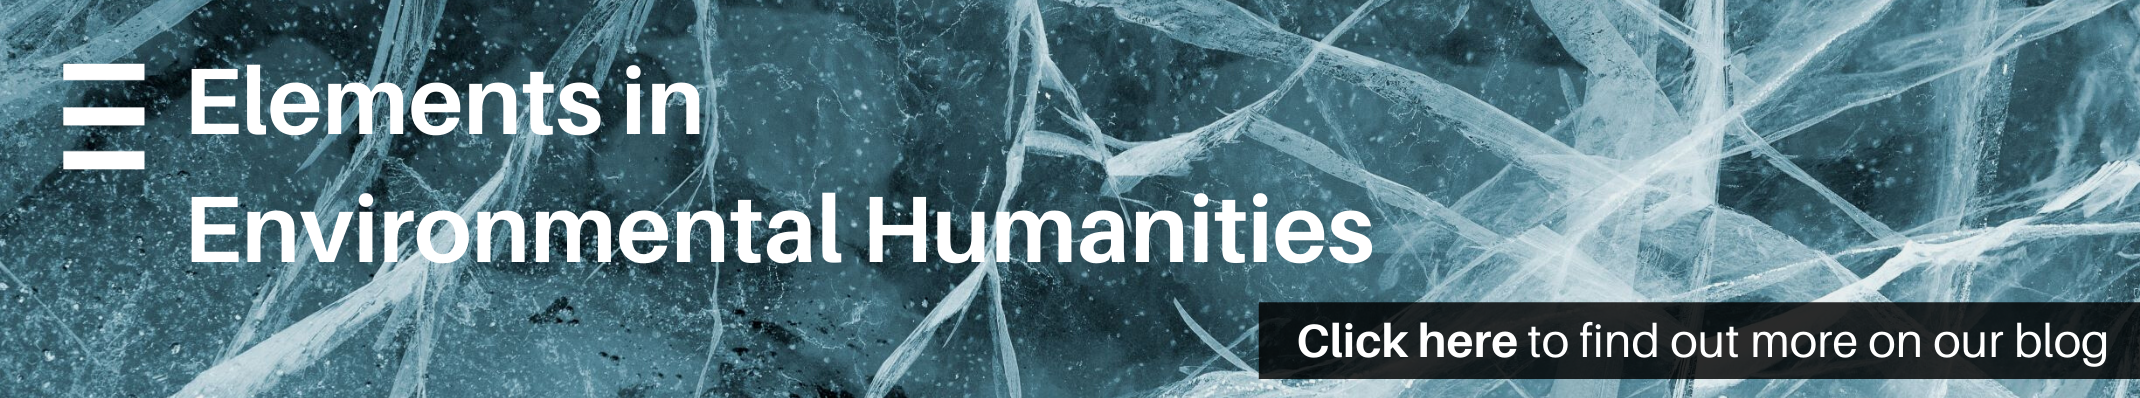 Elements in Environmental Humanities blog